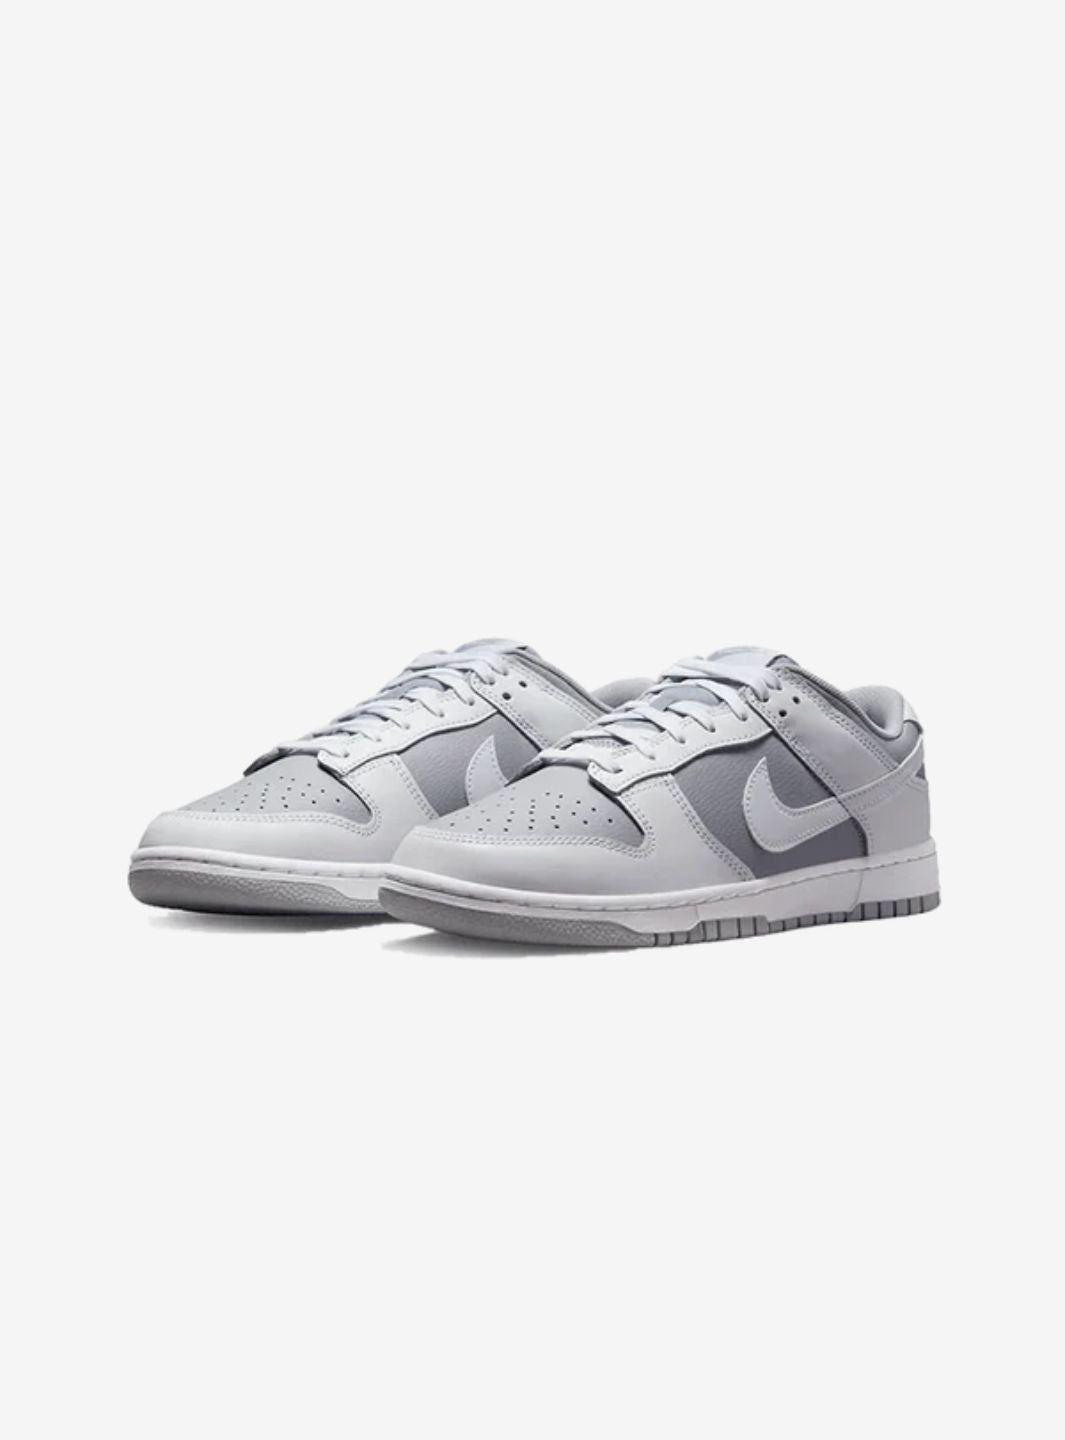 Nike Dunk Low Retro White Grey - DJ6188-003 | ResellZone